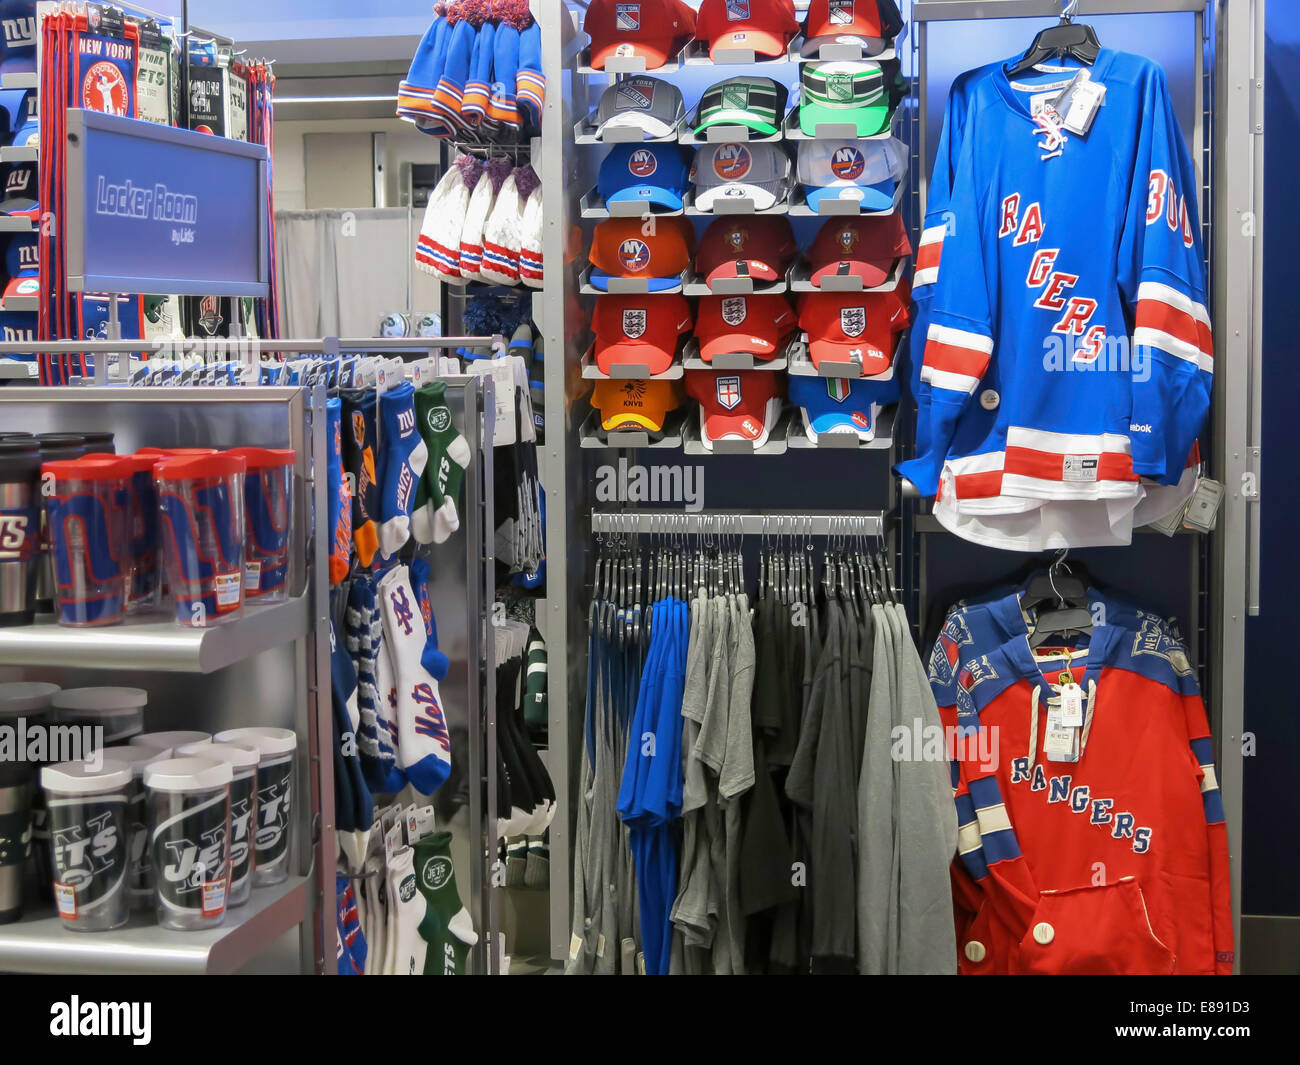 Professional Sports Teams Branded Merchandise Display, Macy's